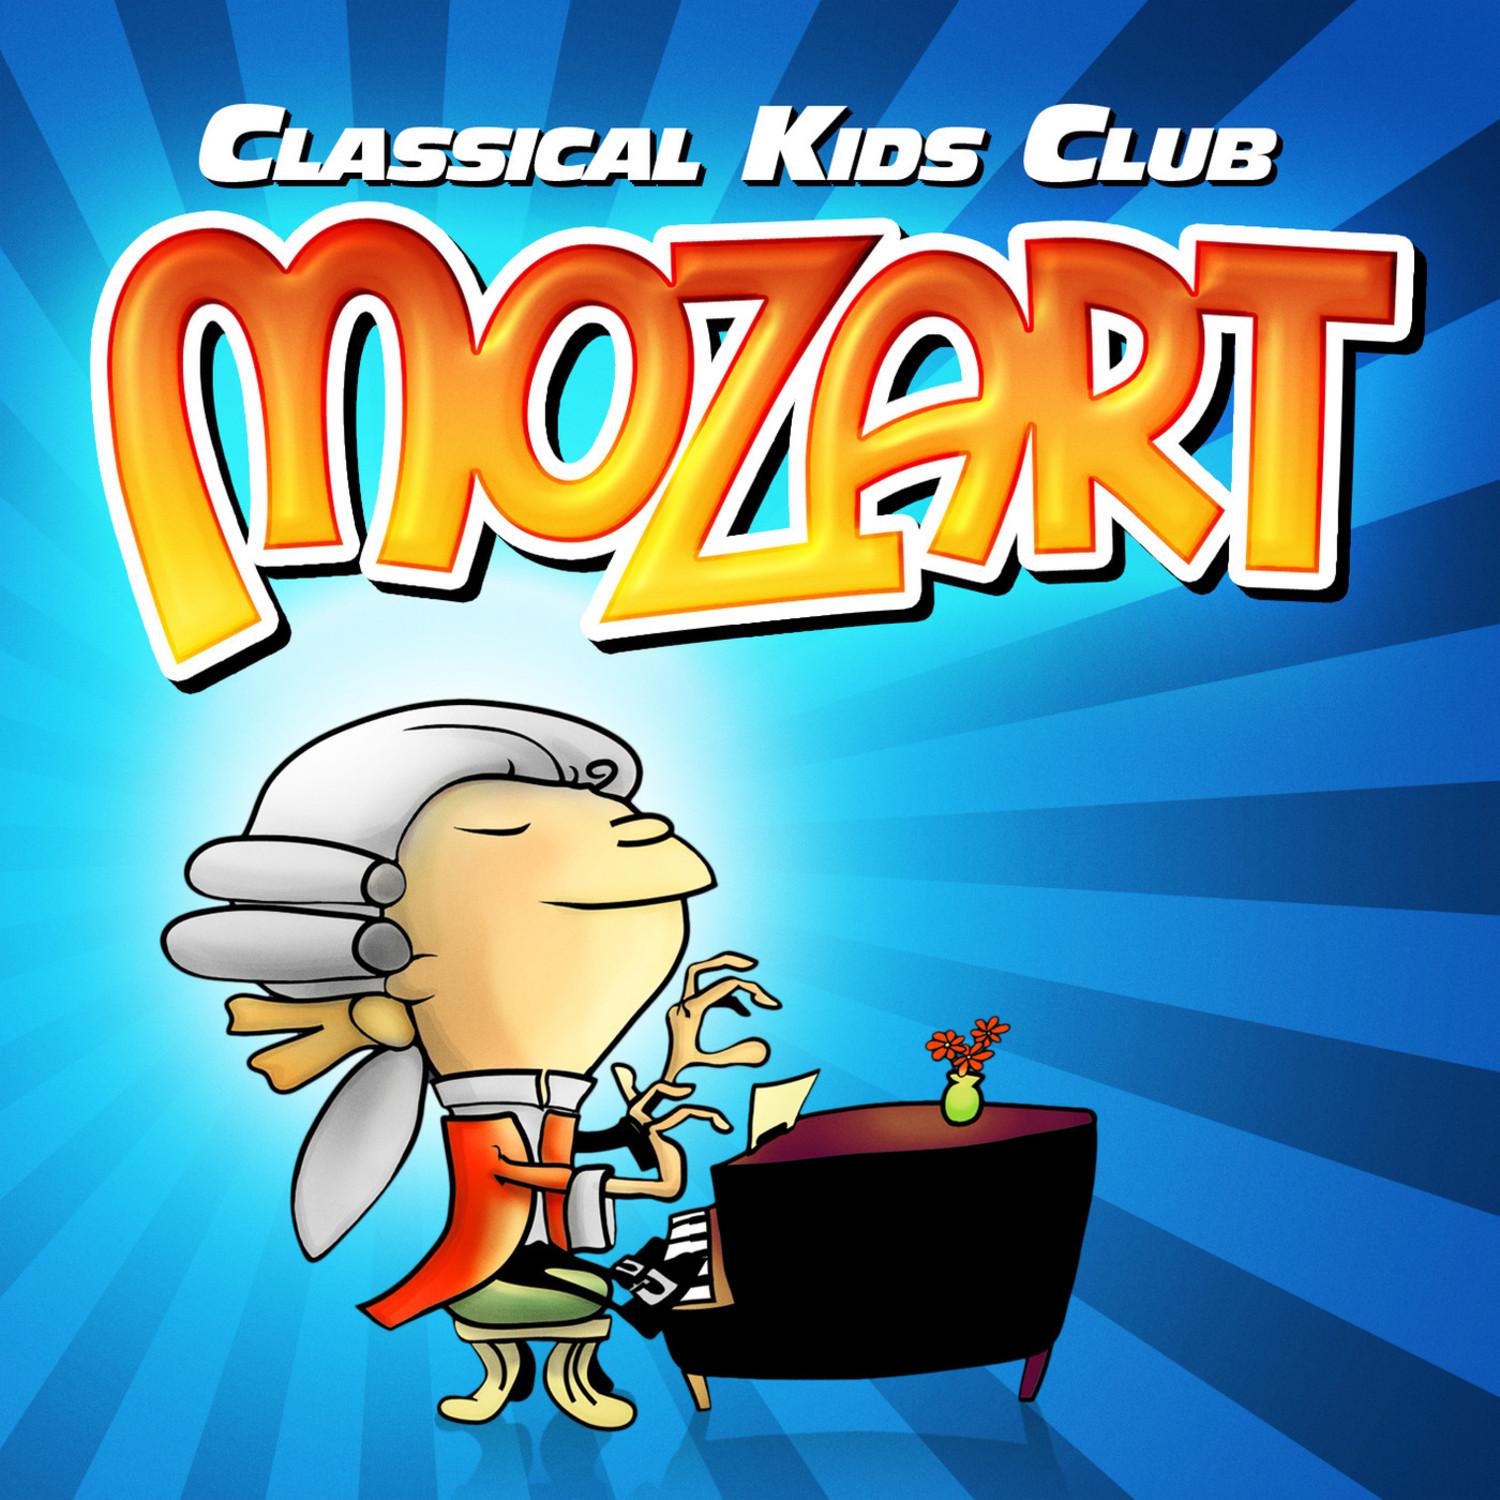 Classical Kids Club: Mozart